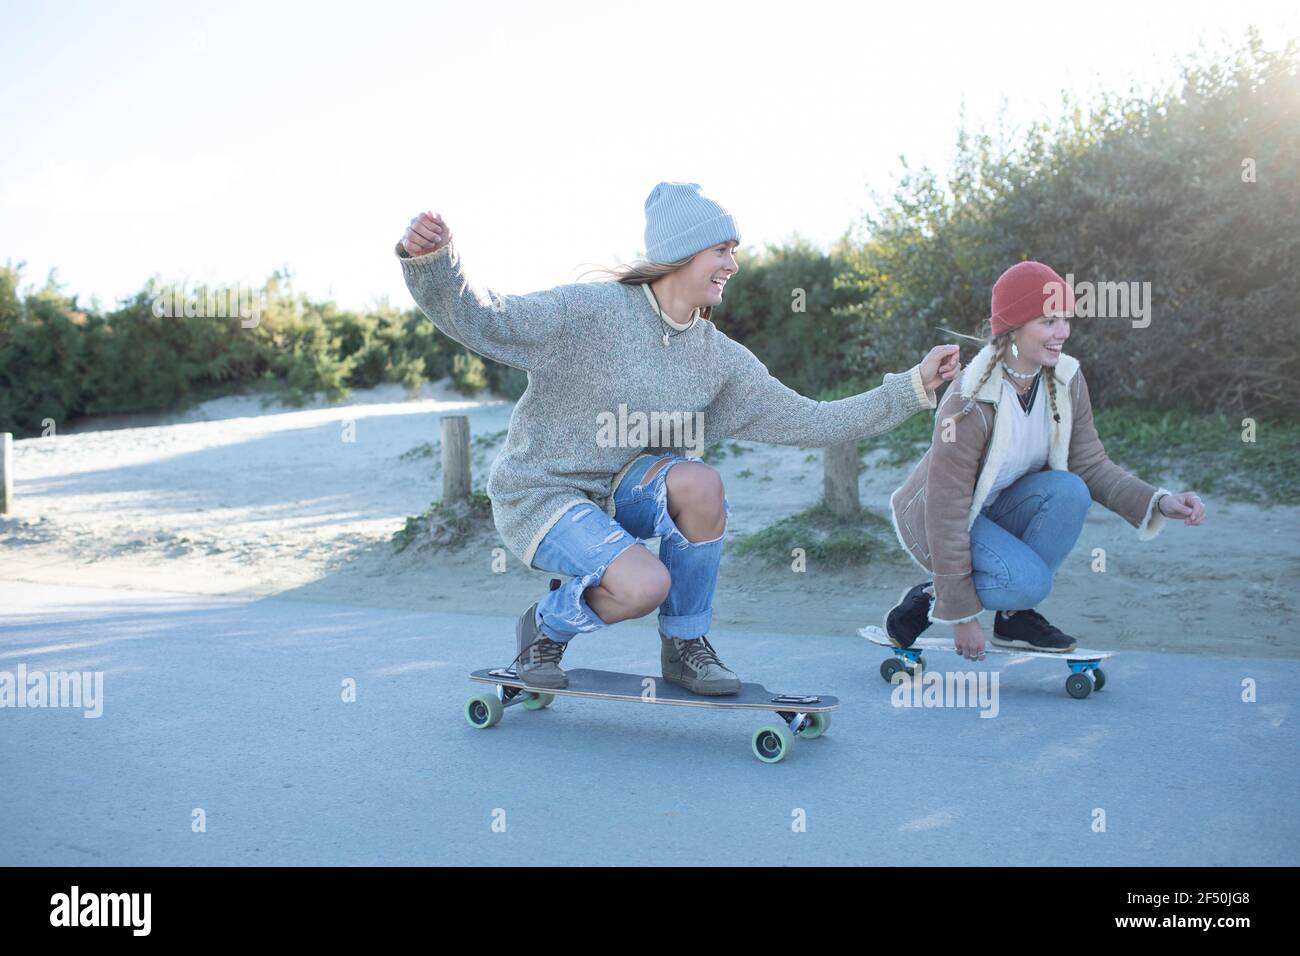 Carefree young women friends skateboarding on beach boardwalk Stock Photo